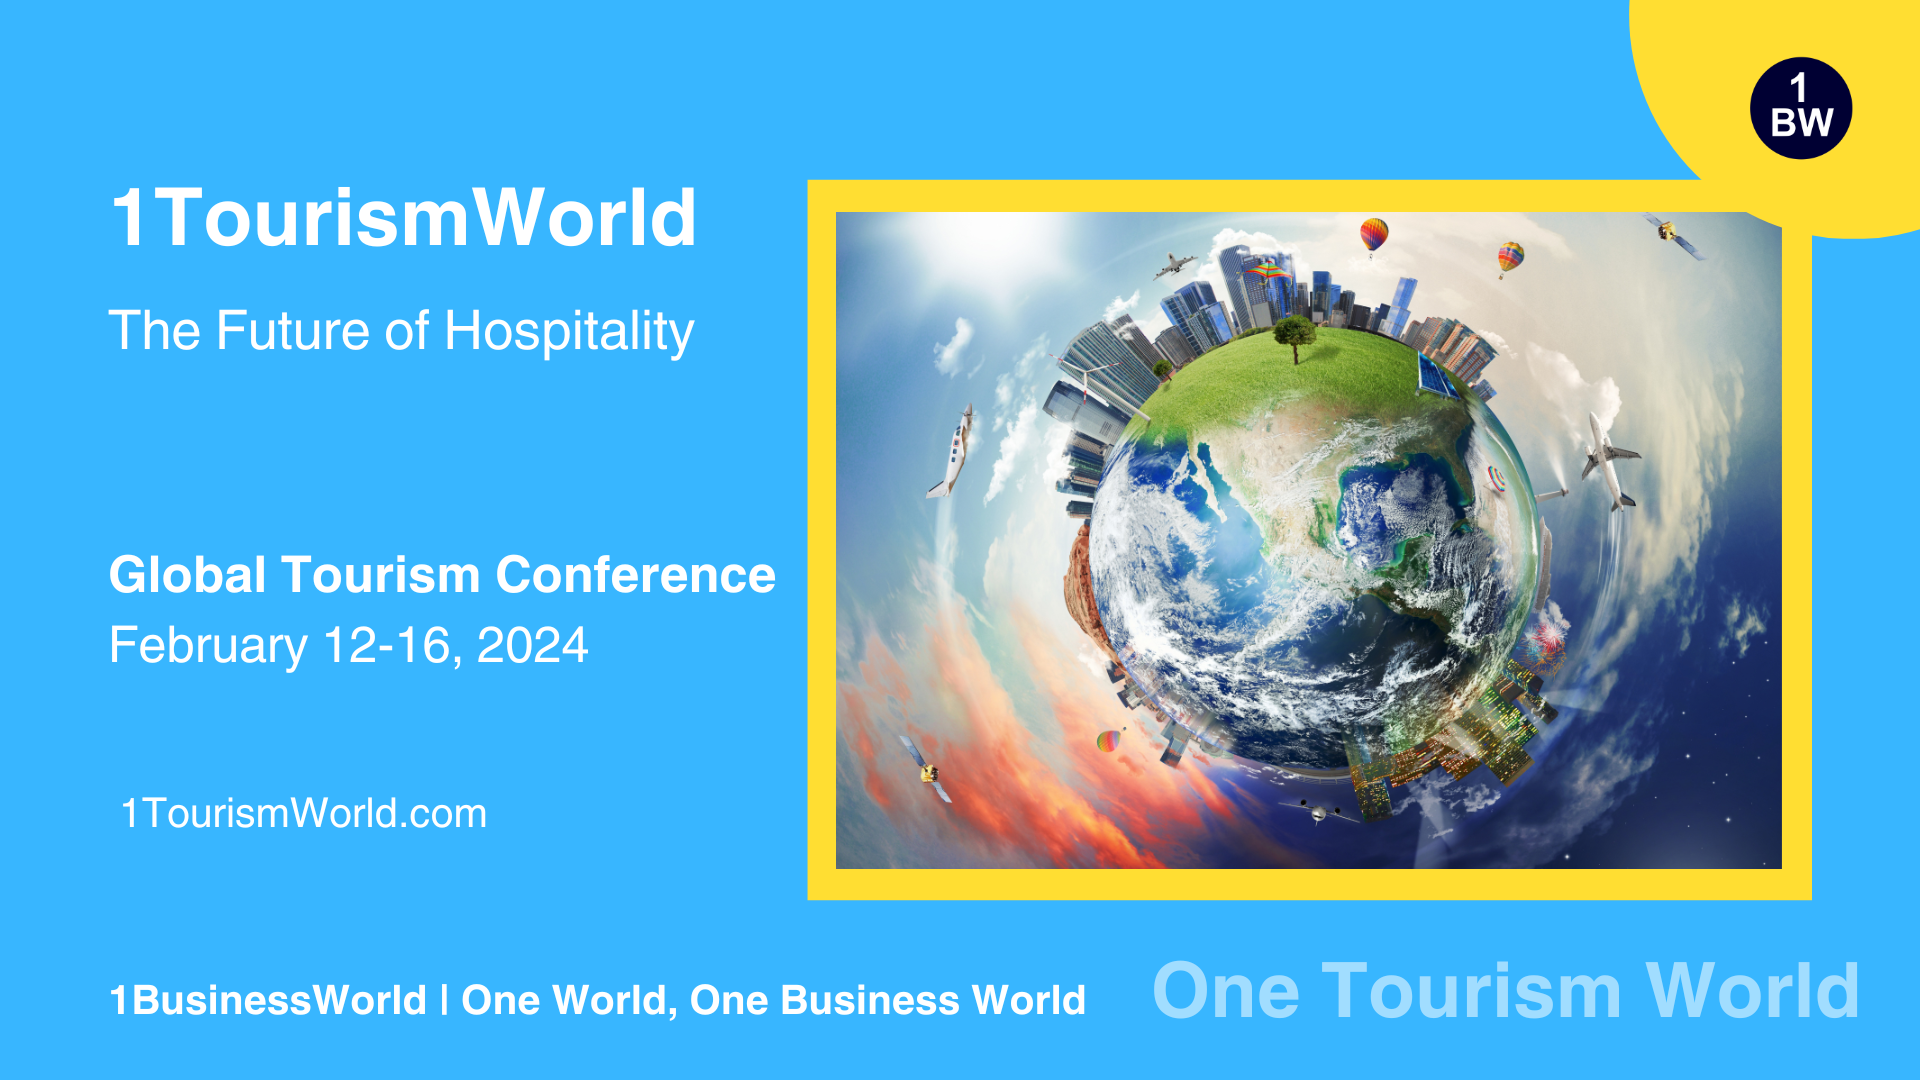 The 1TourismWorld Conference starts on Monday, February 12